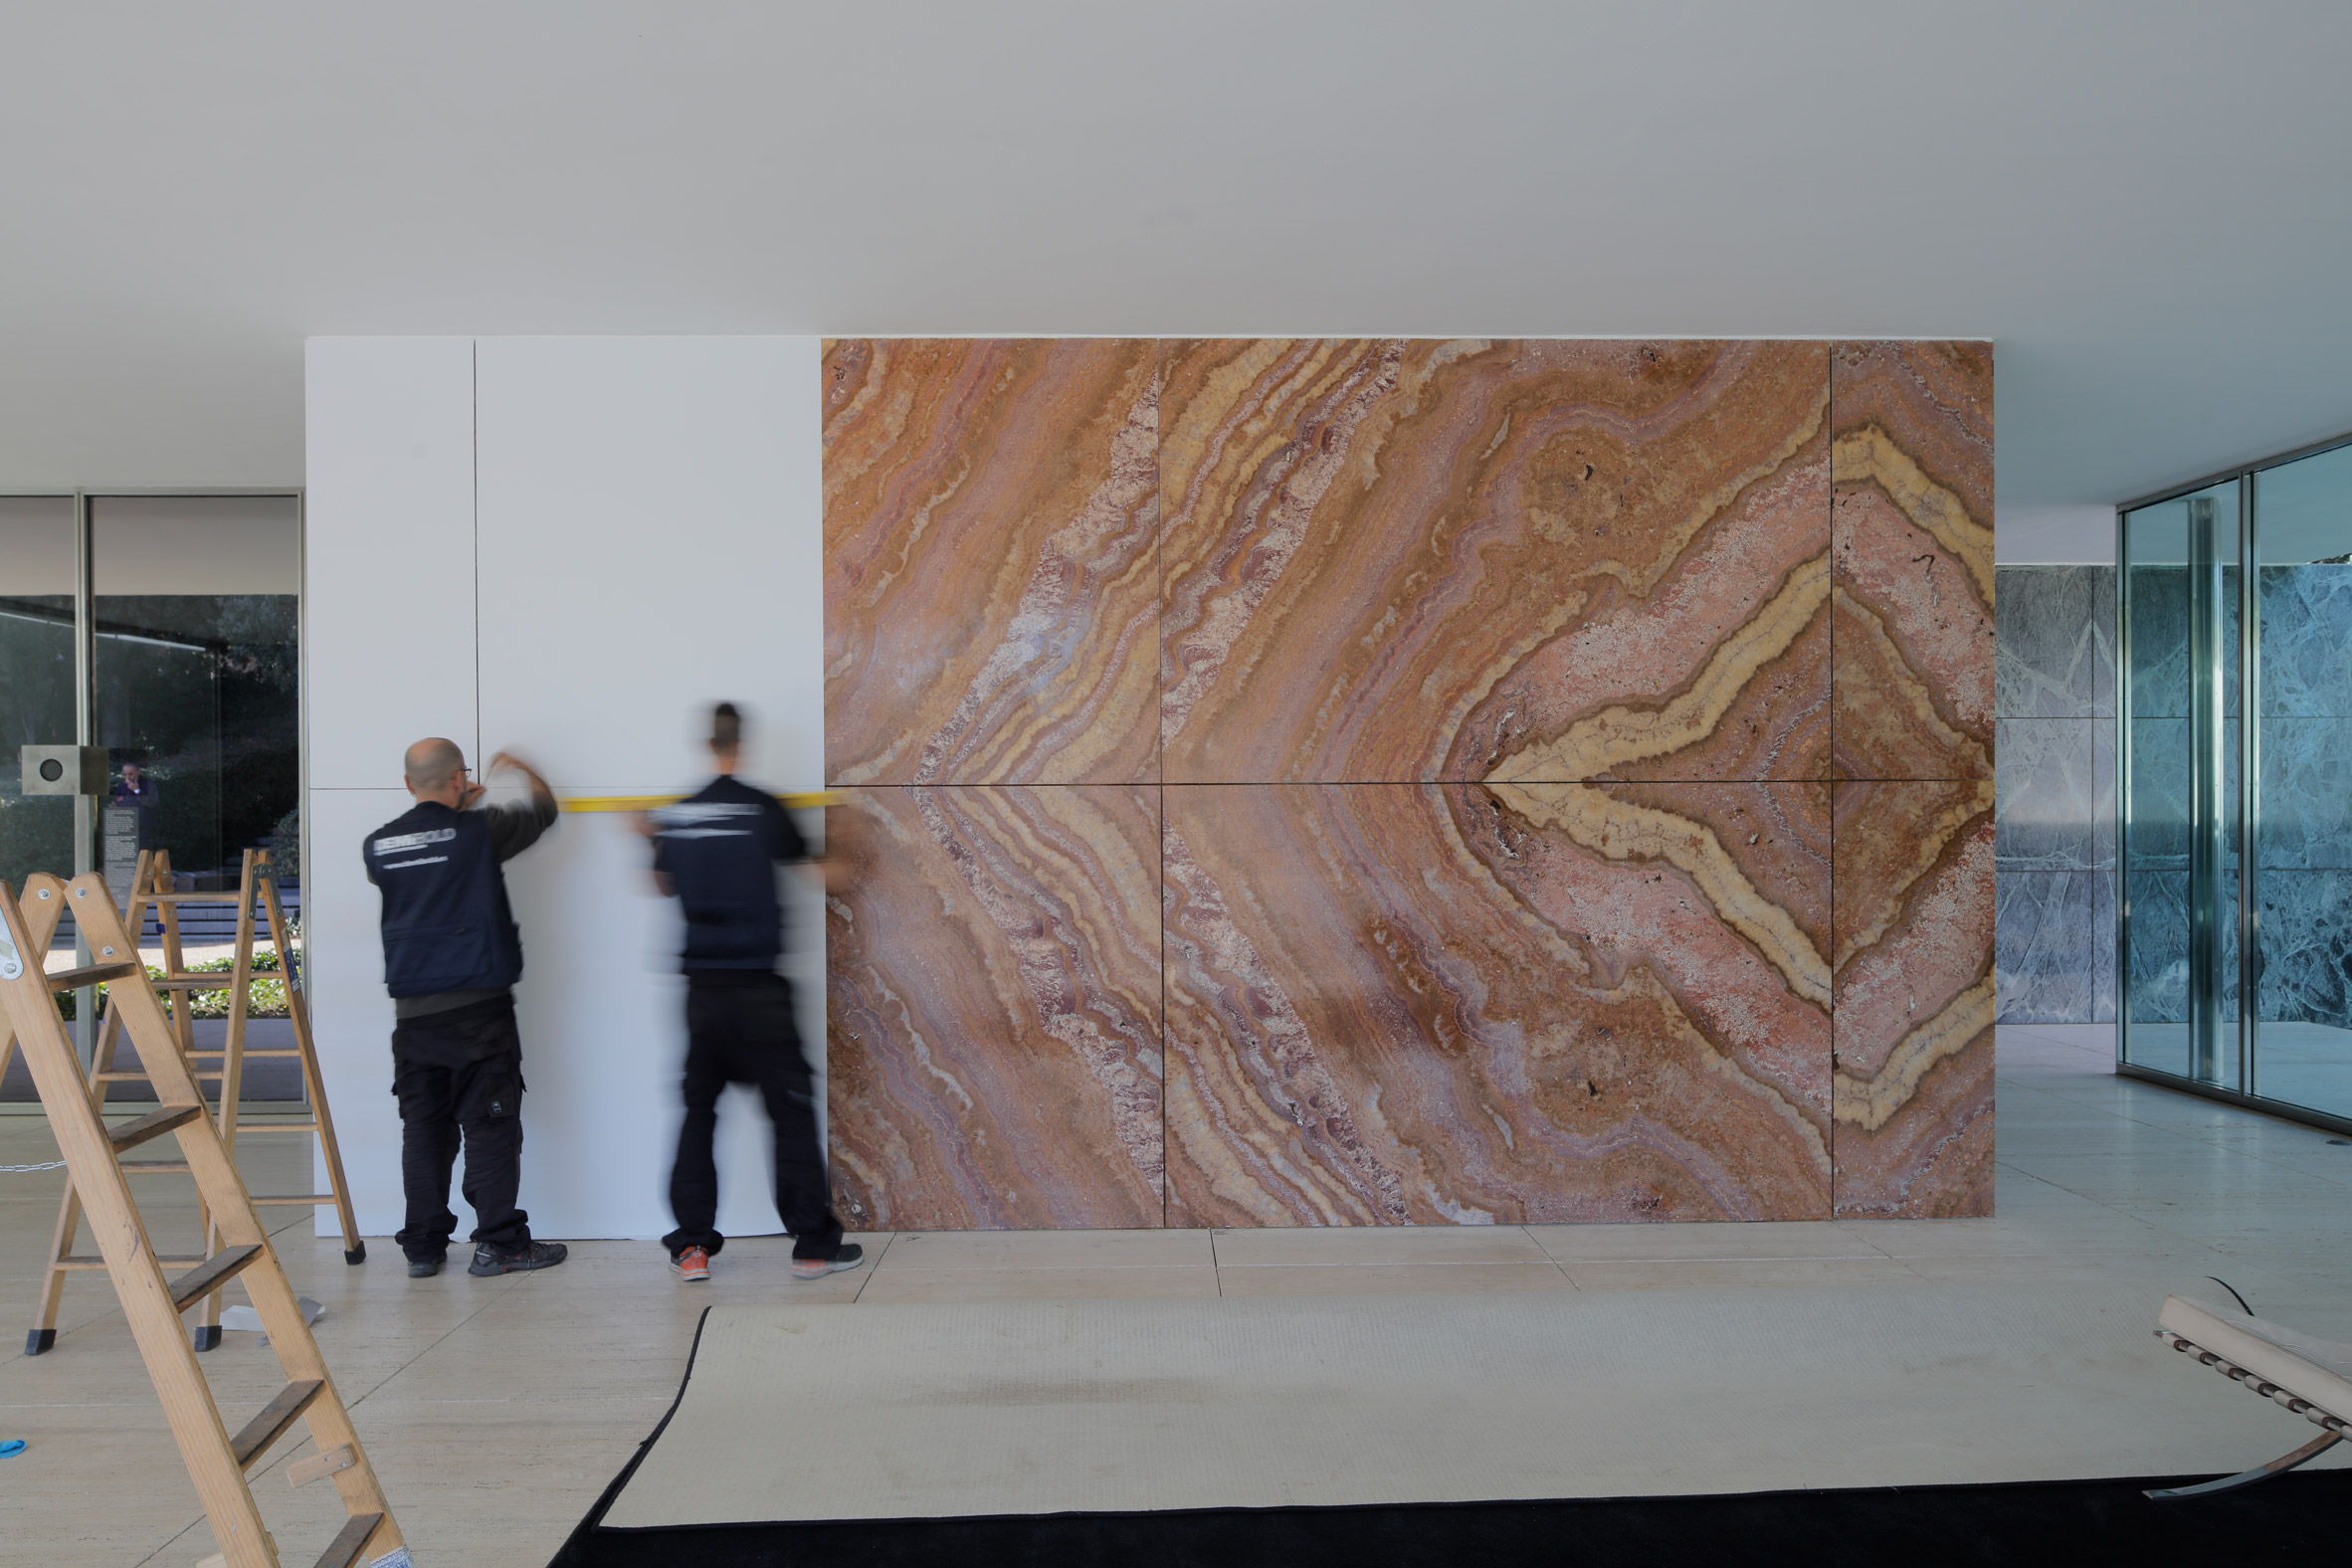 Mies van der Rohe's Barcelona Pavilion loses its marble walls-9